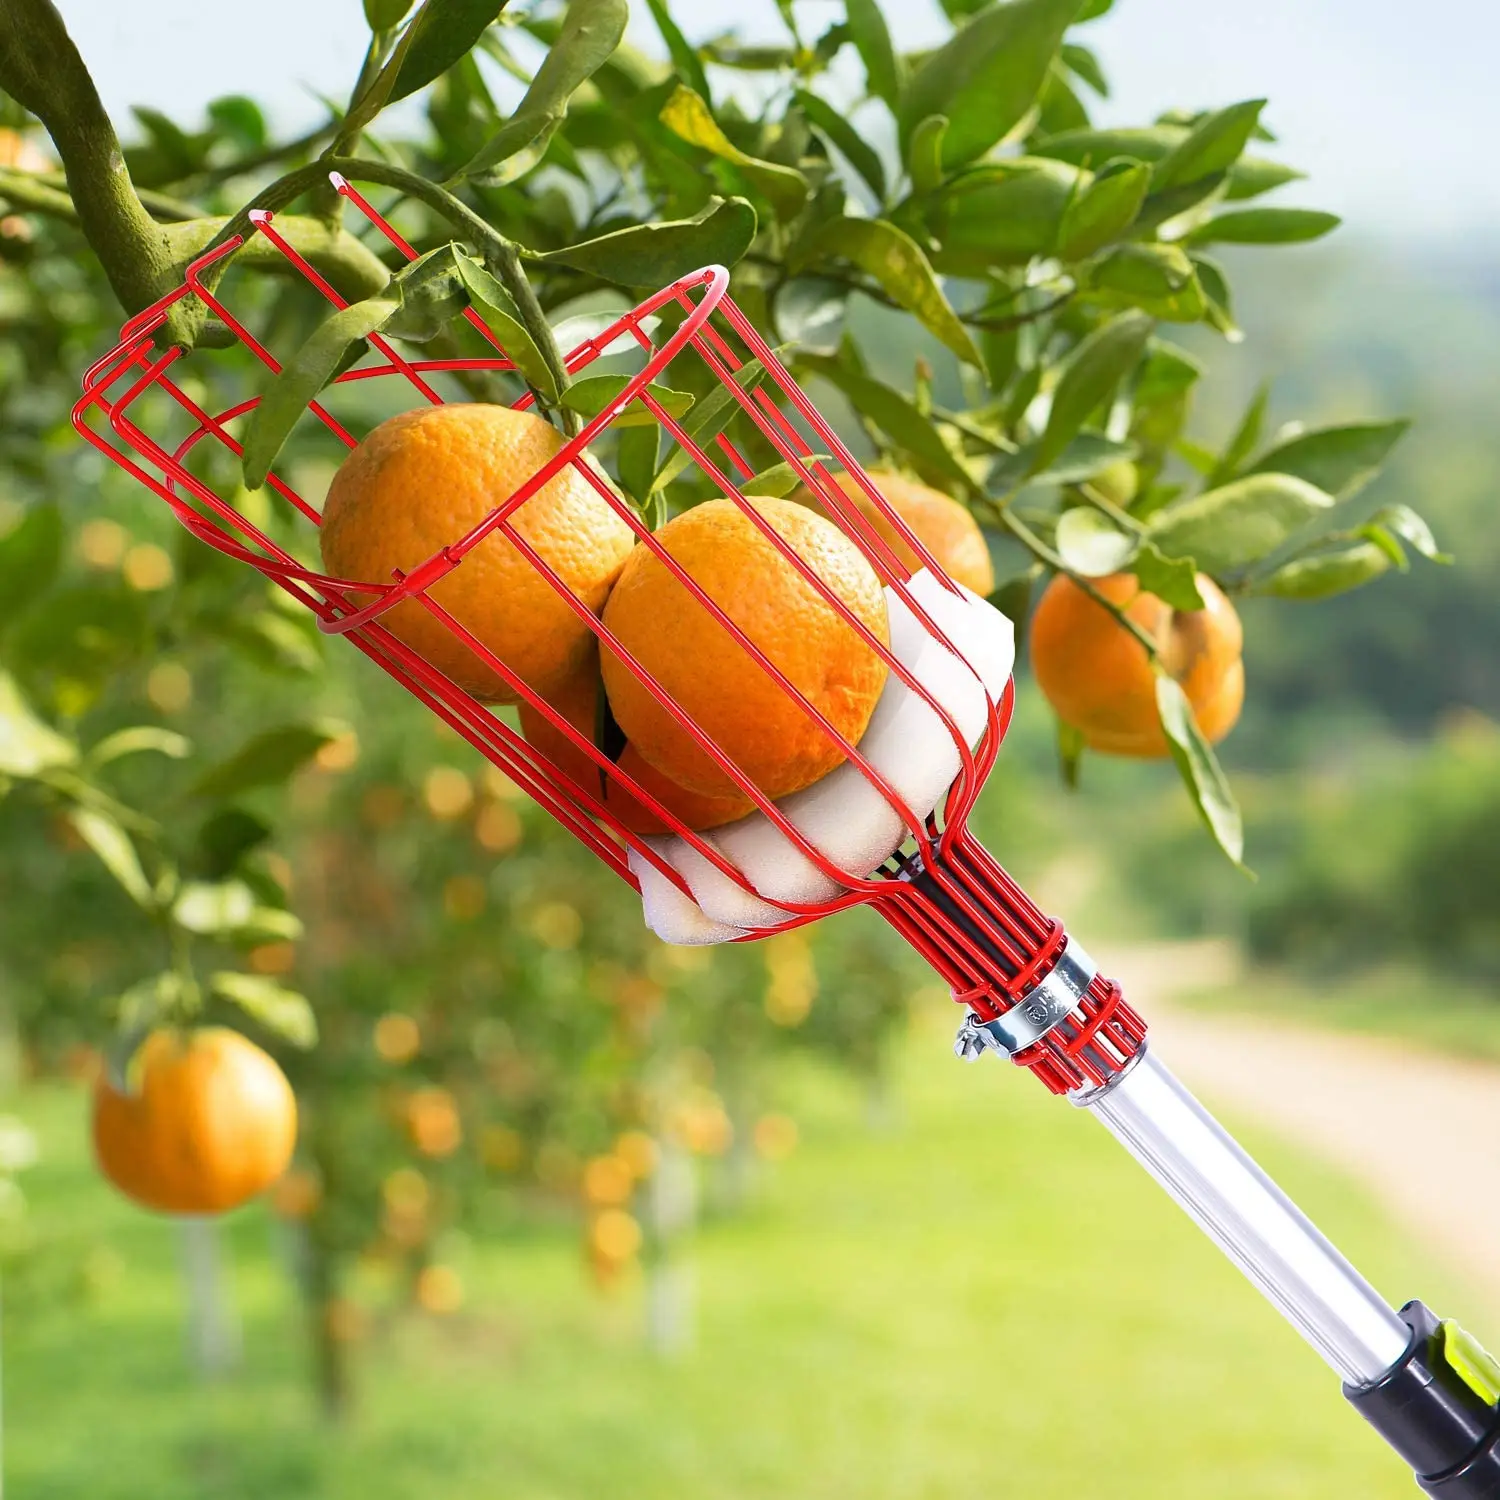 Fruit Picker Head Basket Apple Picking Harvester Horticulture Gardening To xfgh 